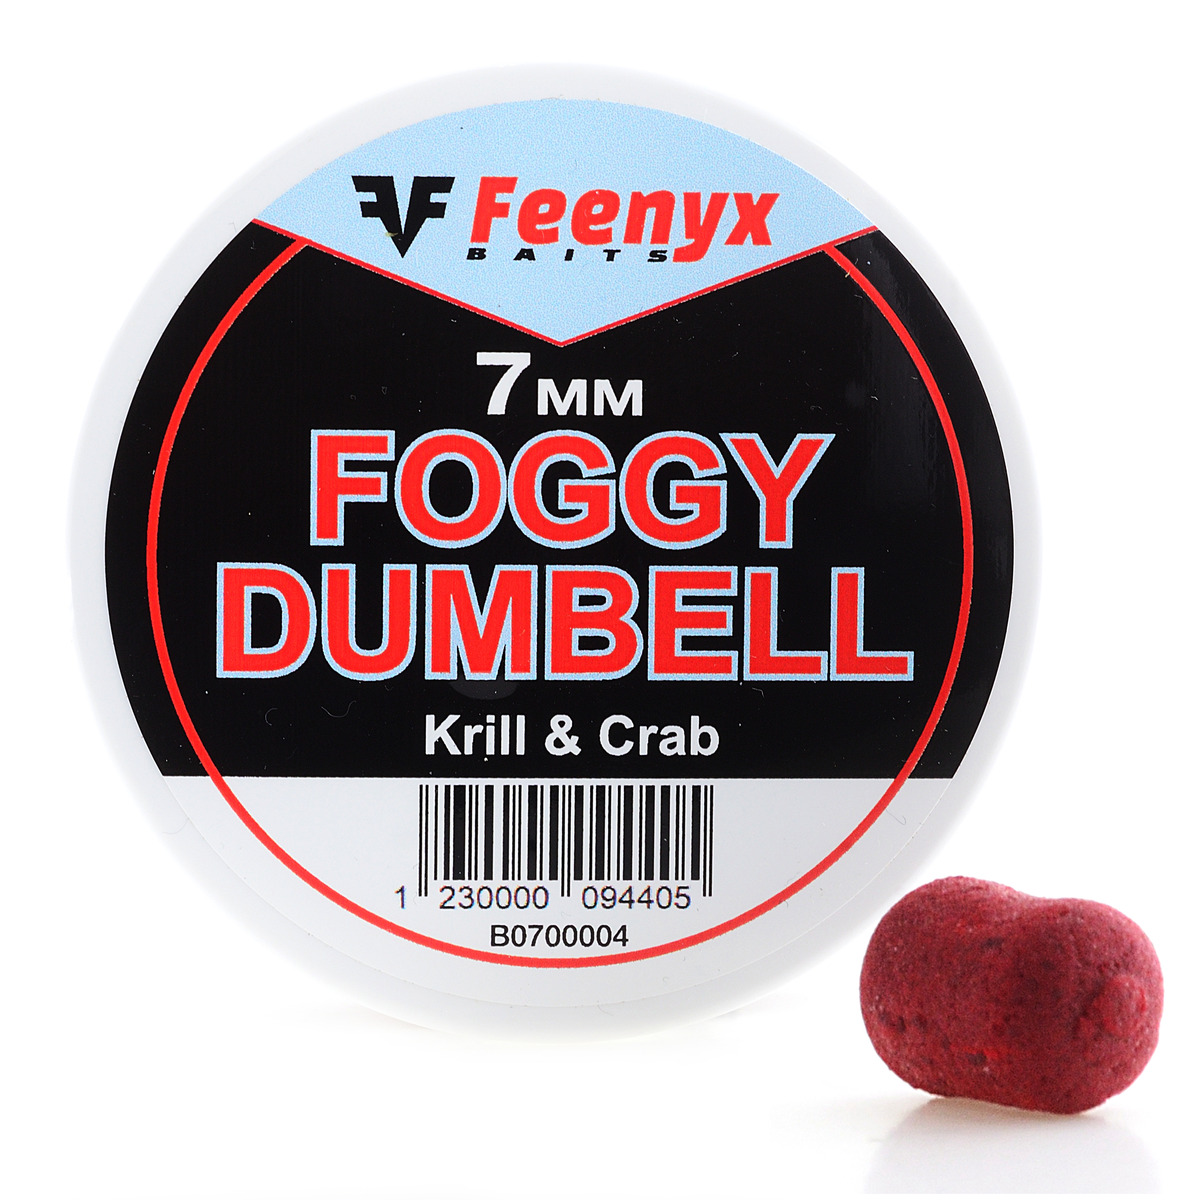 Feenyx Foggy Dumbell Krill & Crab - 7 mm